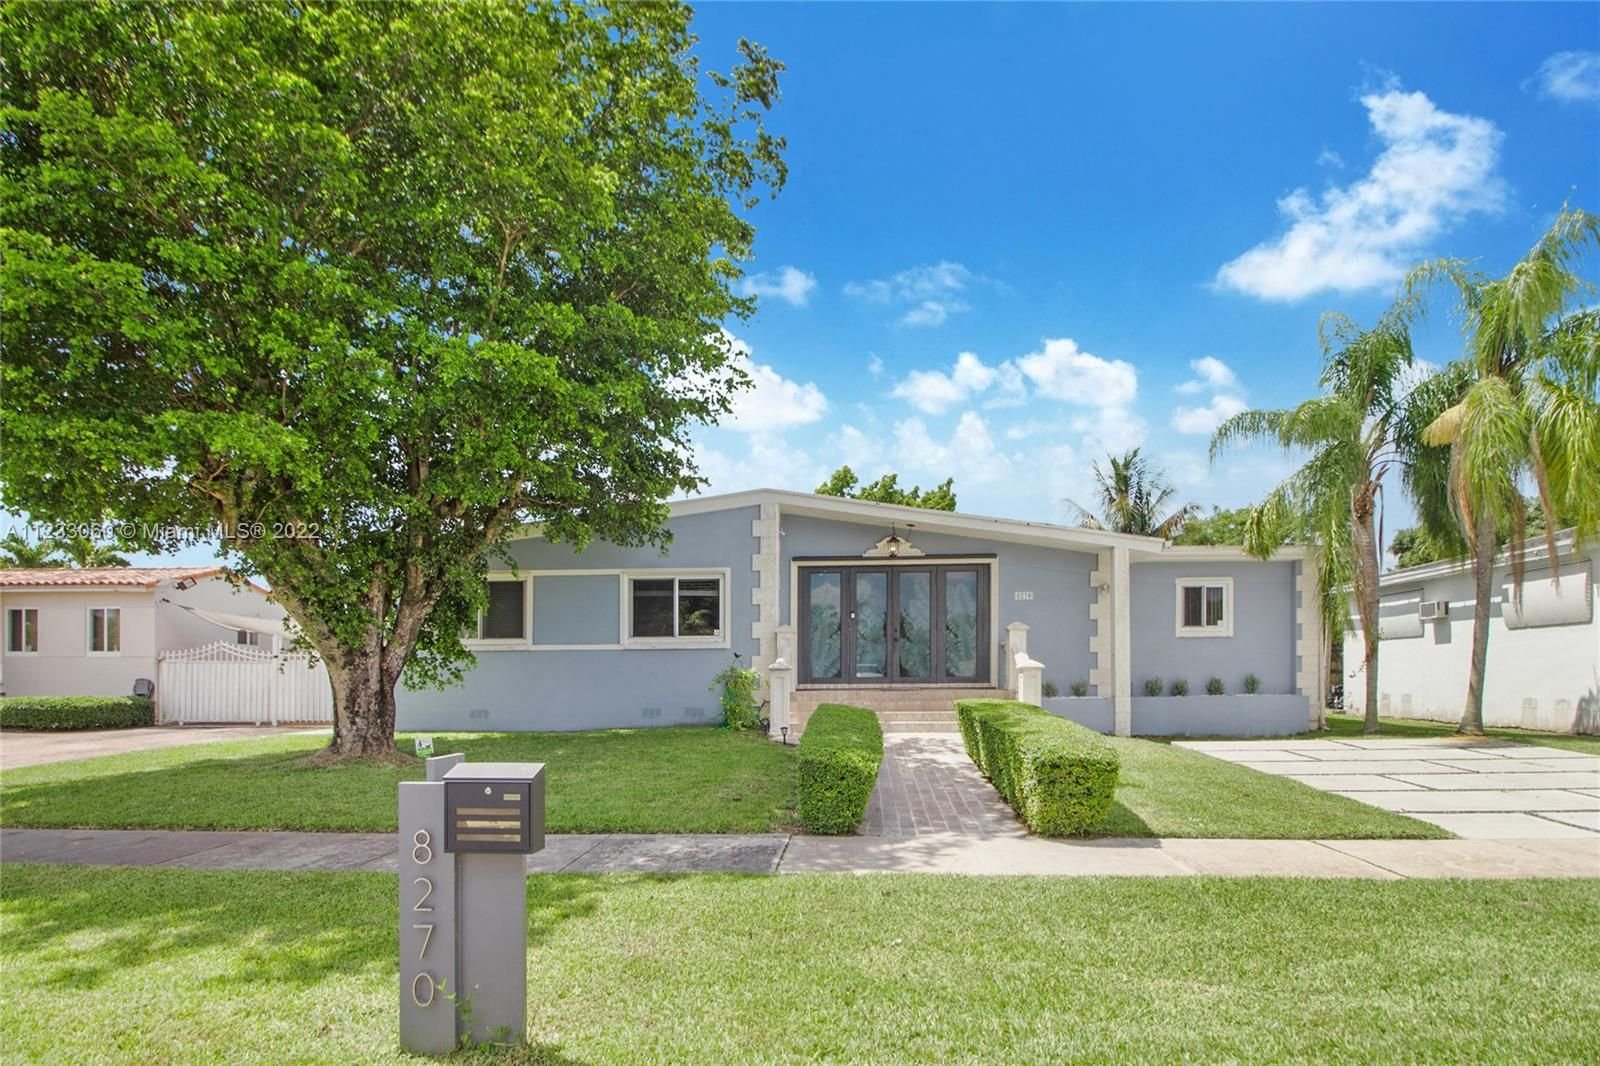 Real estate property located at 8270 30th St, Miami-Dade County, Miami, FL